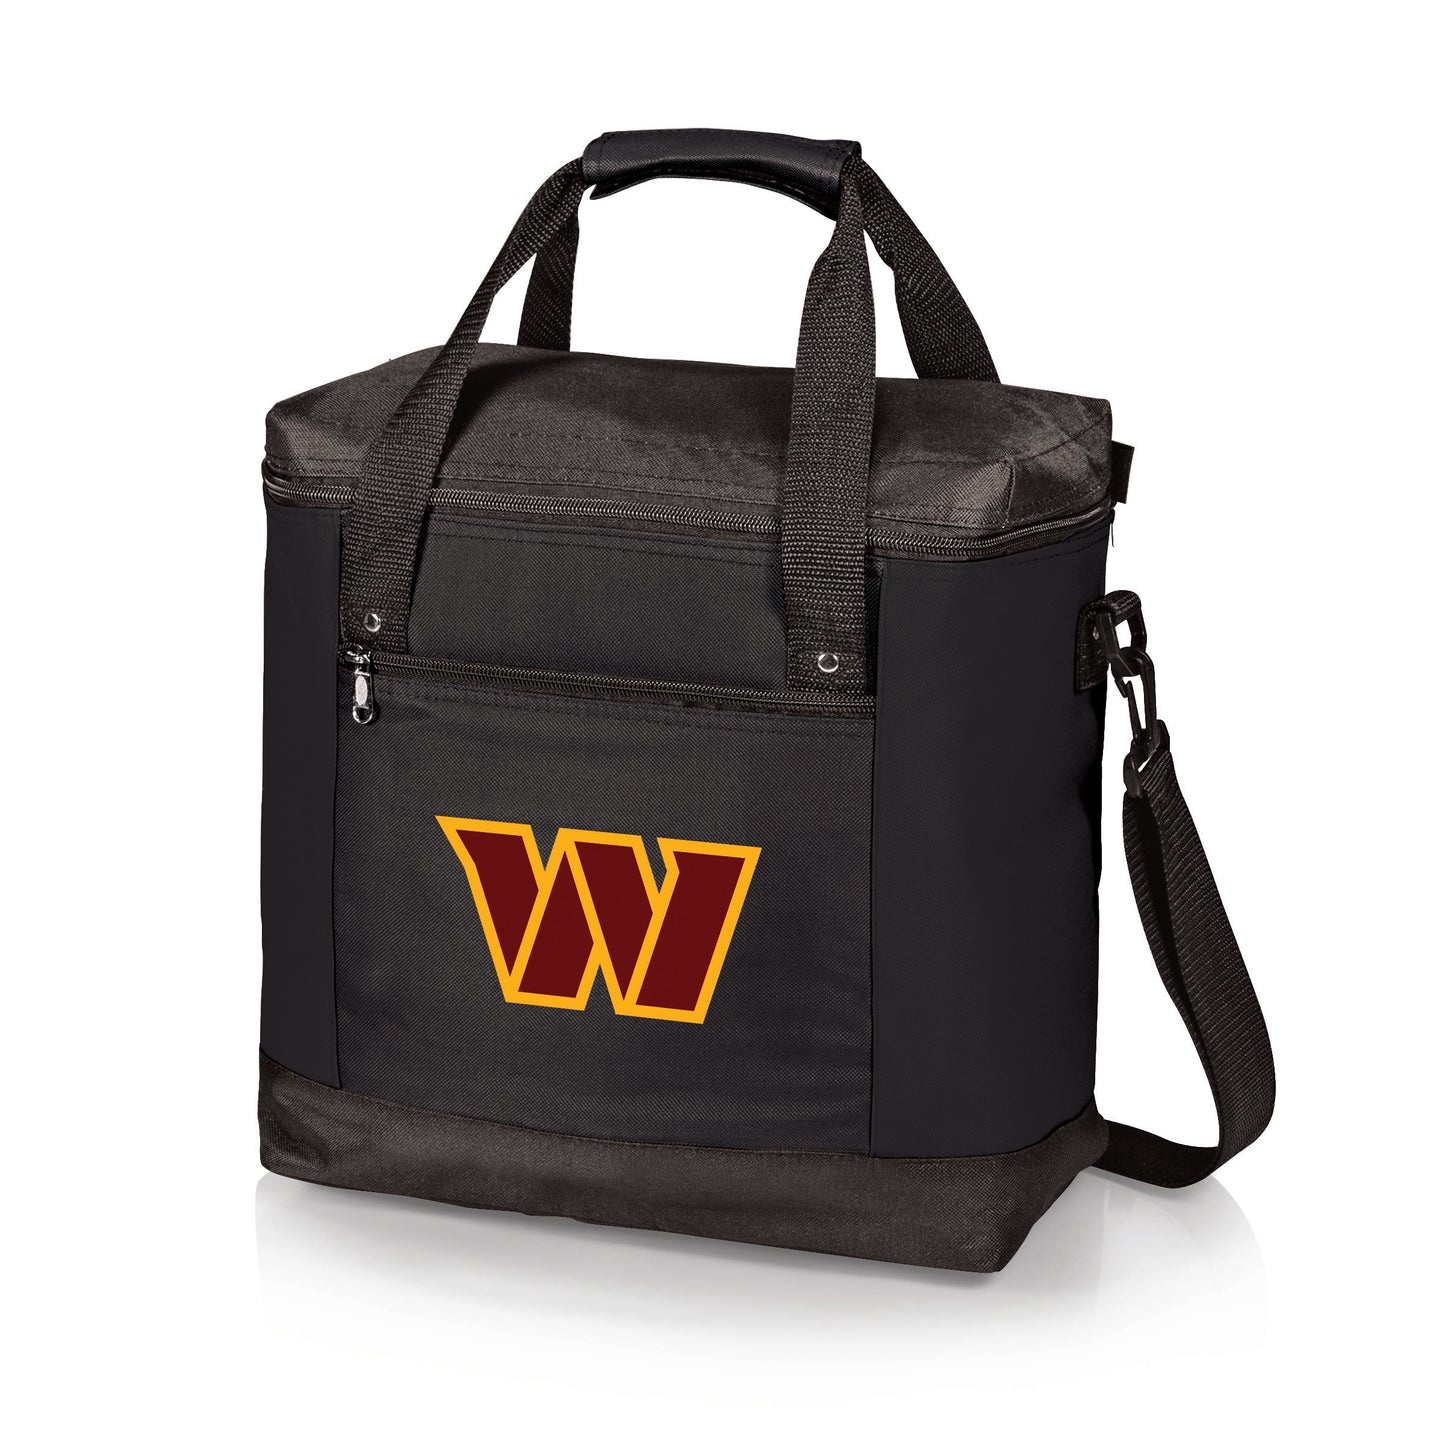 Washington Commanders - Montero Cooler Tote Bag